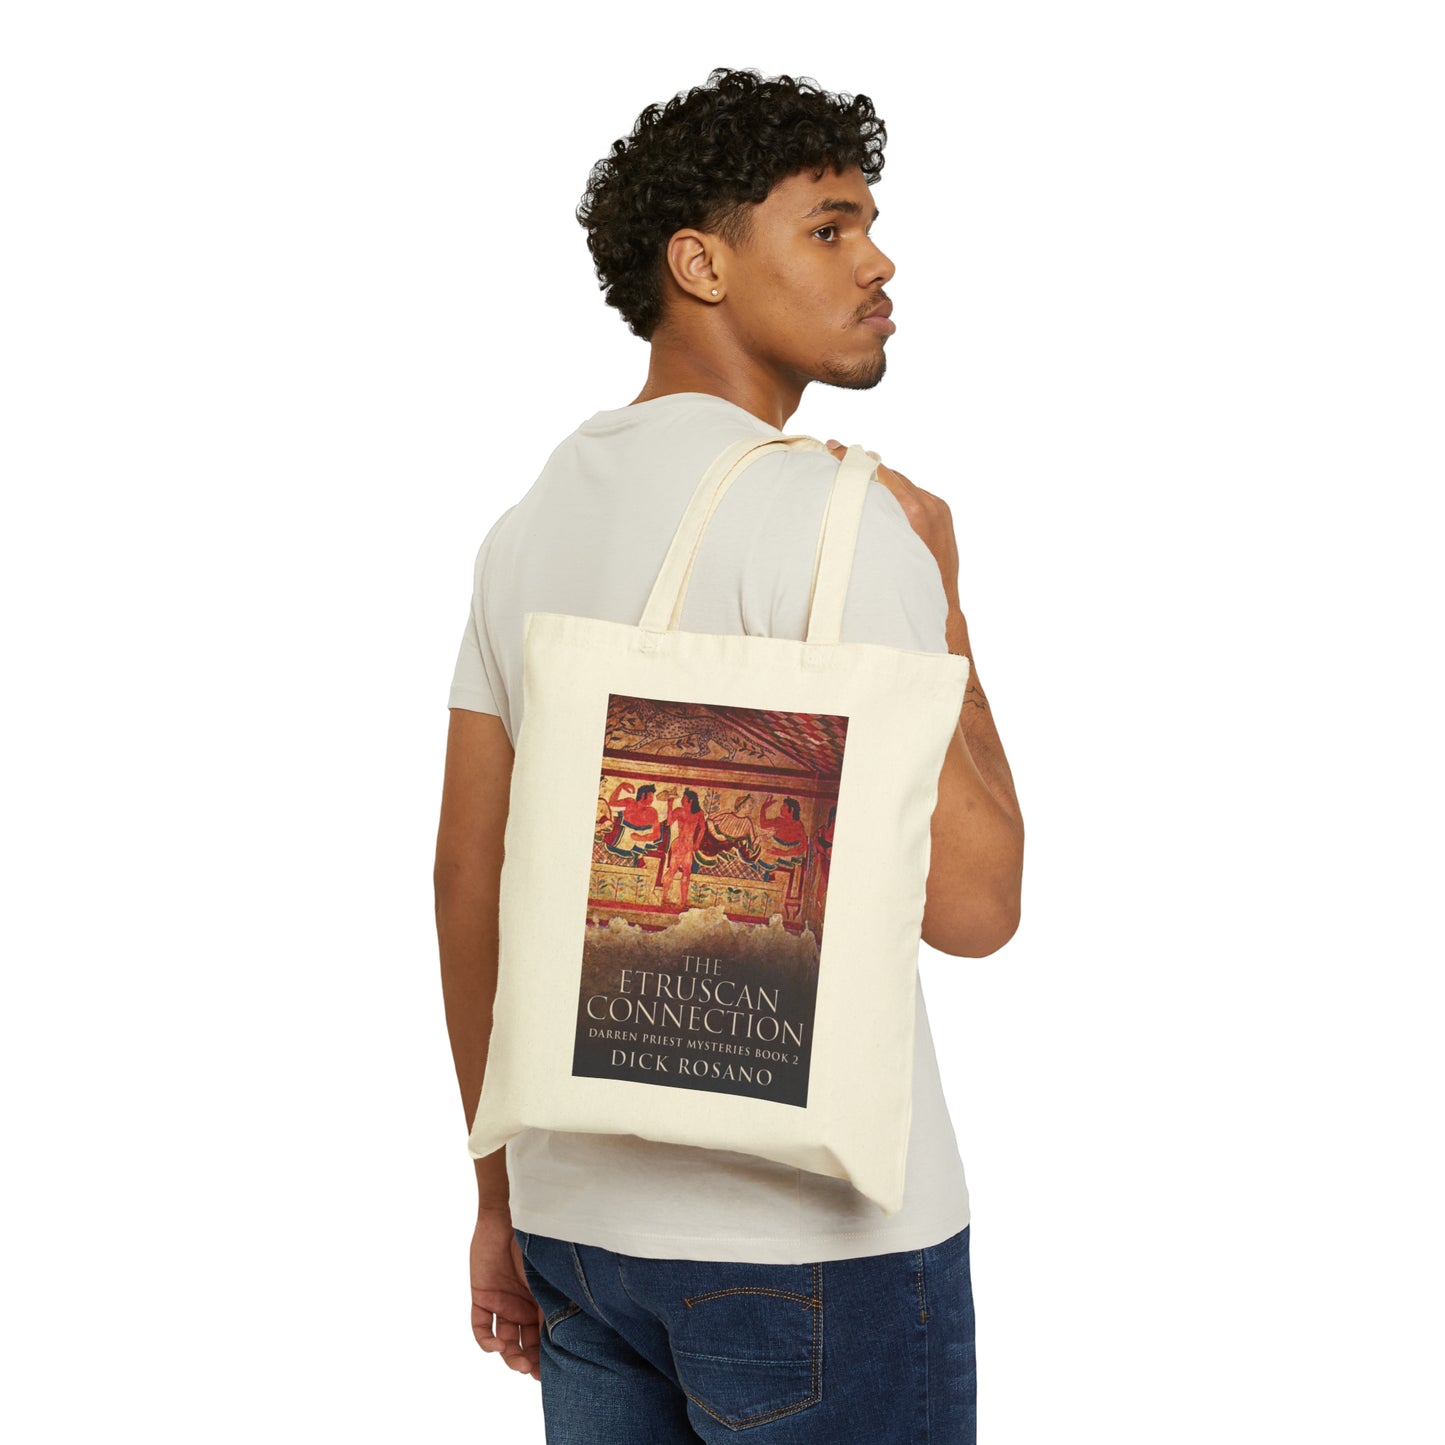 The Etruscan Connection - Cotton Canvas Tote Bag